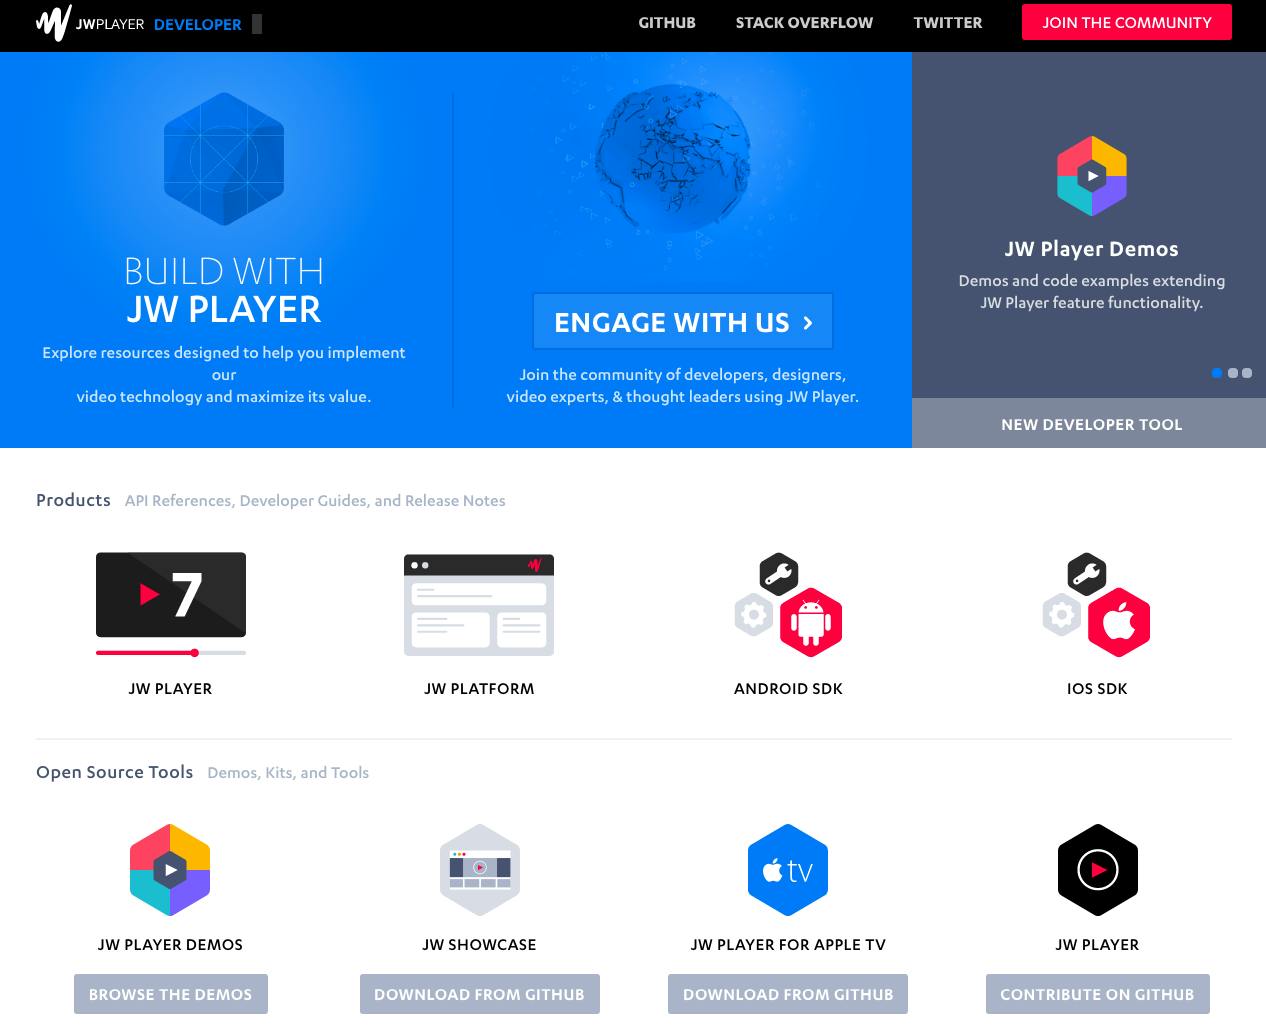 Announcing the JW Player Developer Portal | JW Player